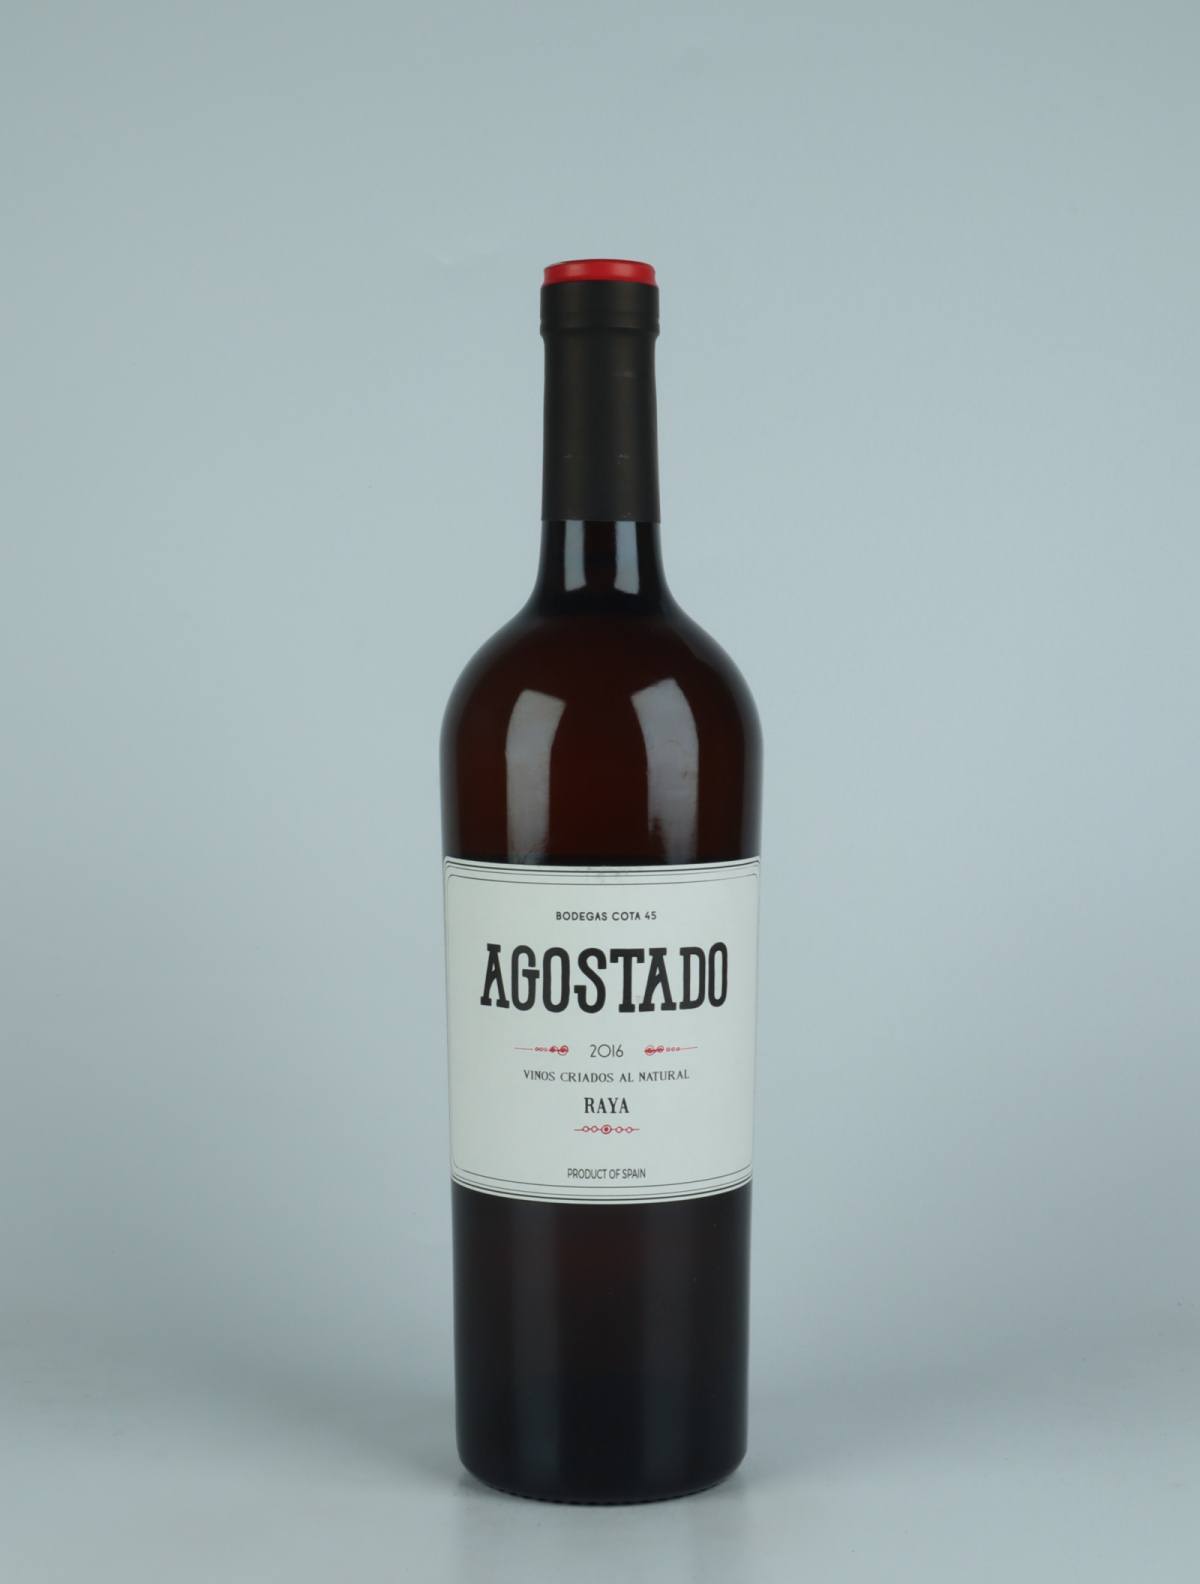 En flaske 2016 Agostado Raya Olorosa Hvidvin fra Bodegas Cota 45, Andalusien i Spanien